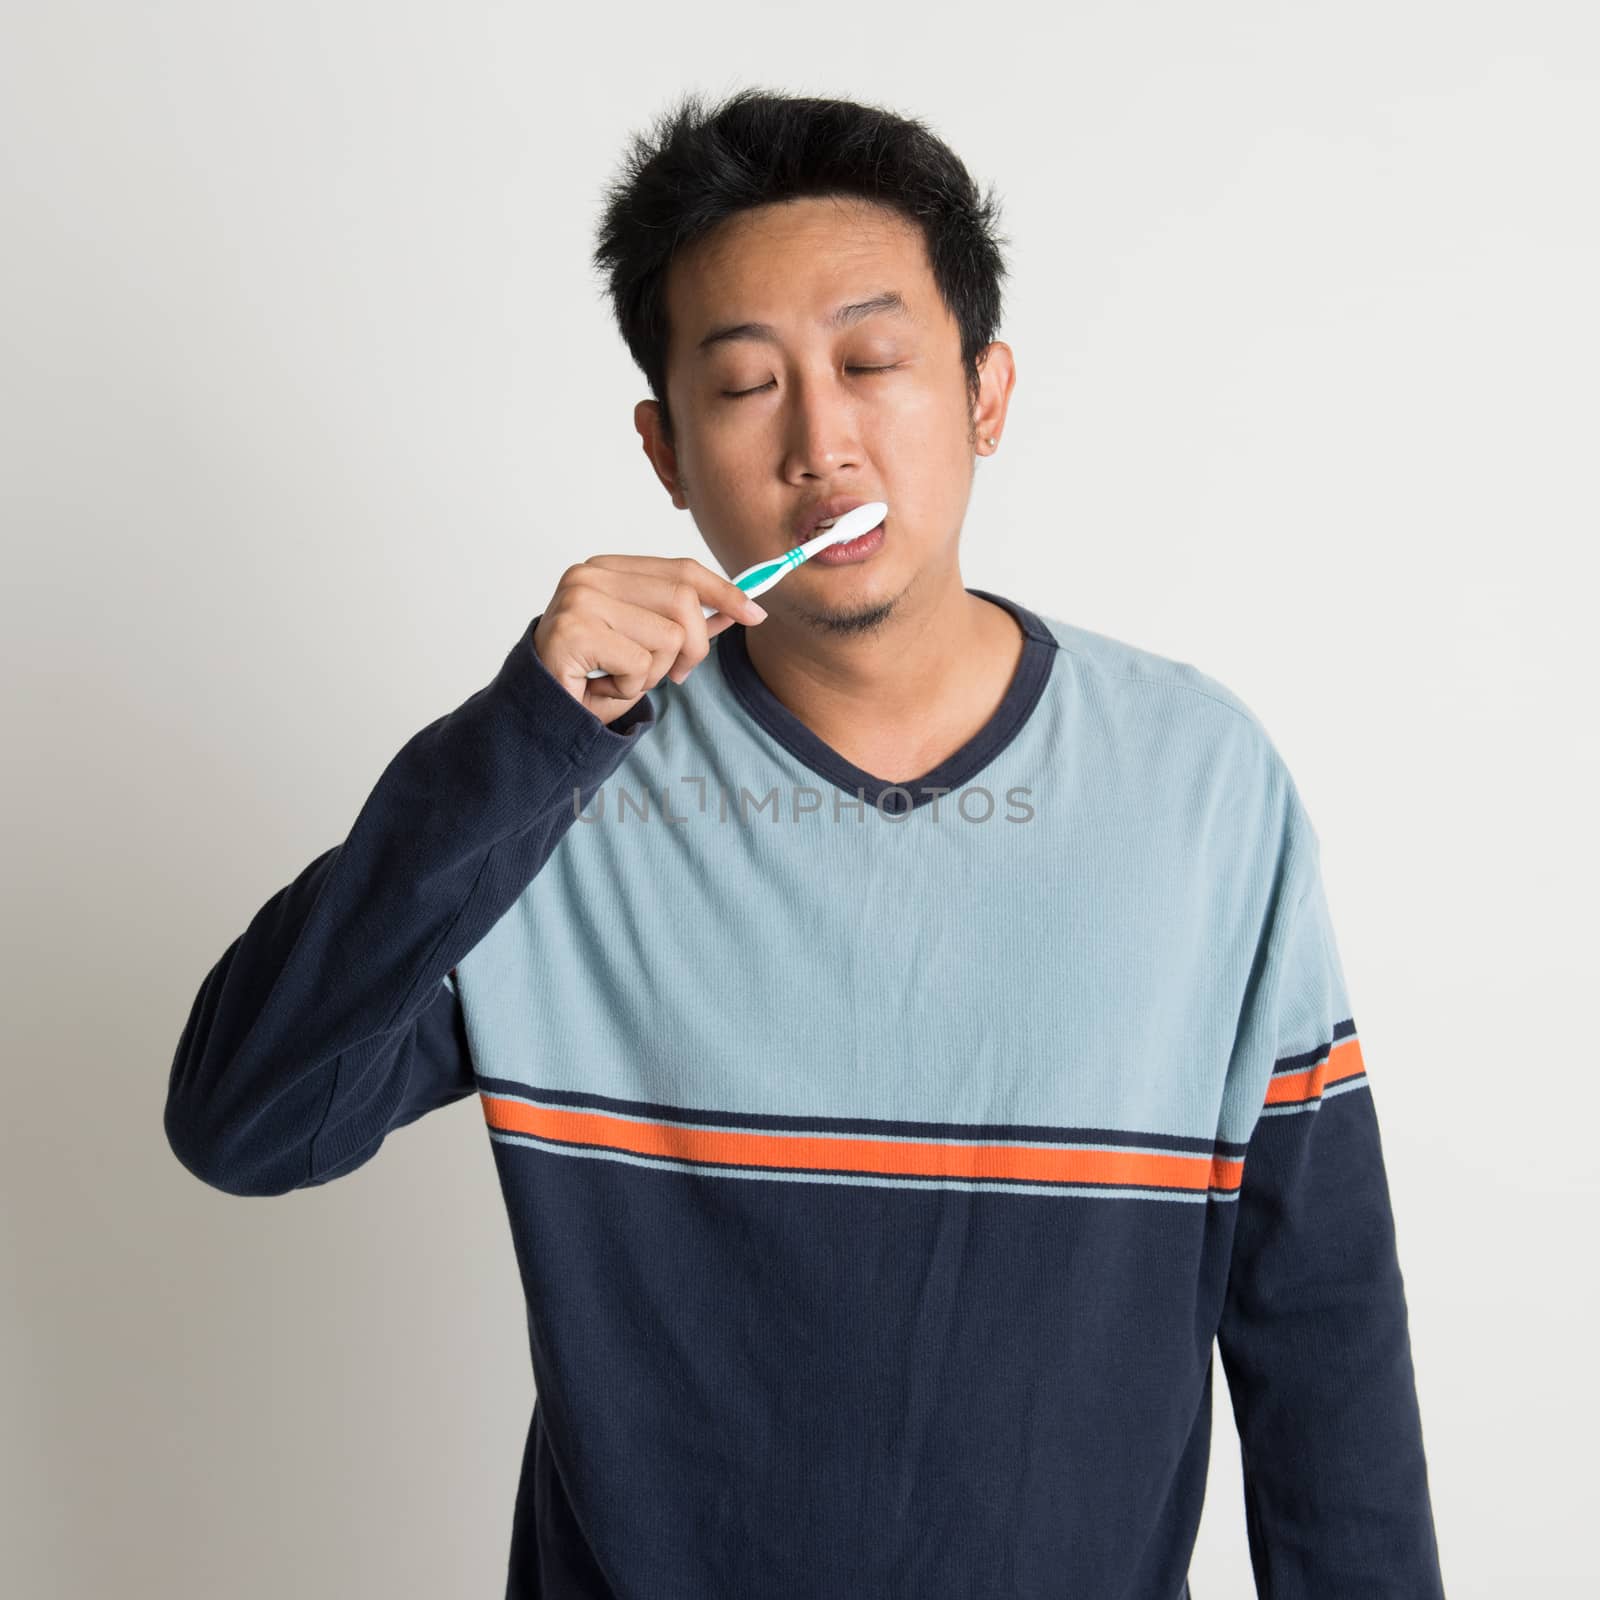 Asian male brushing teeth  by szefei